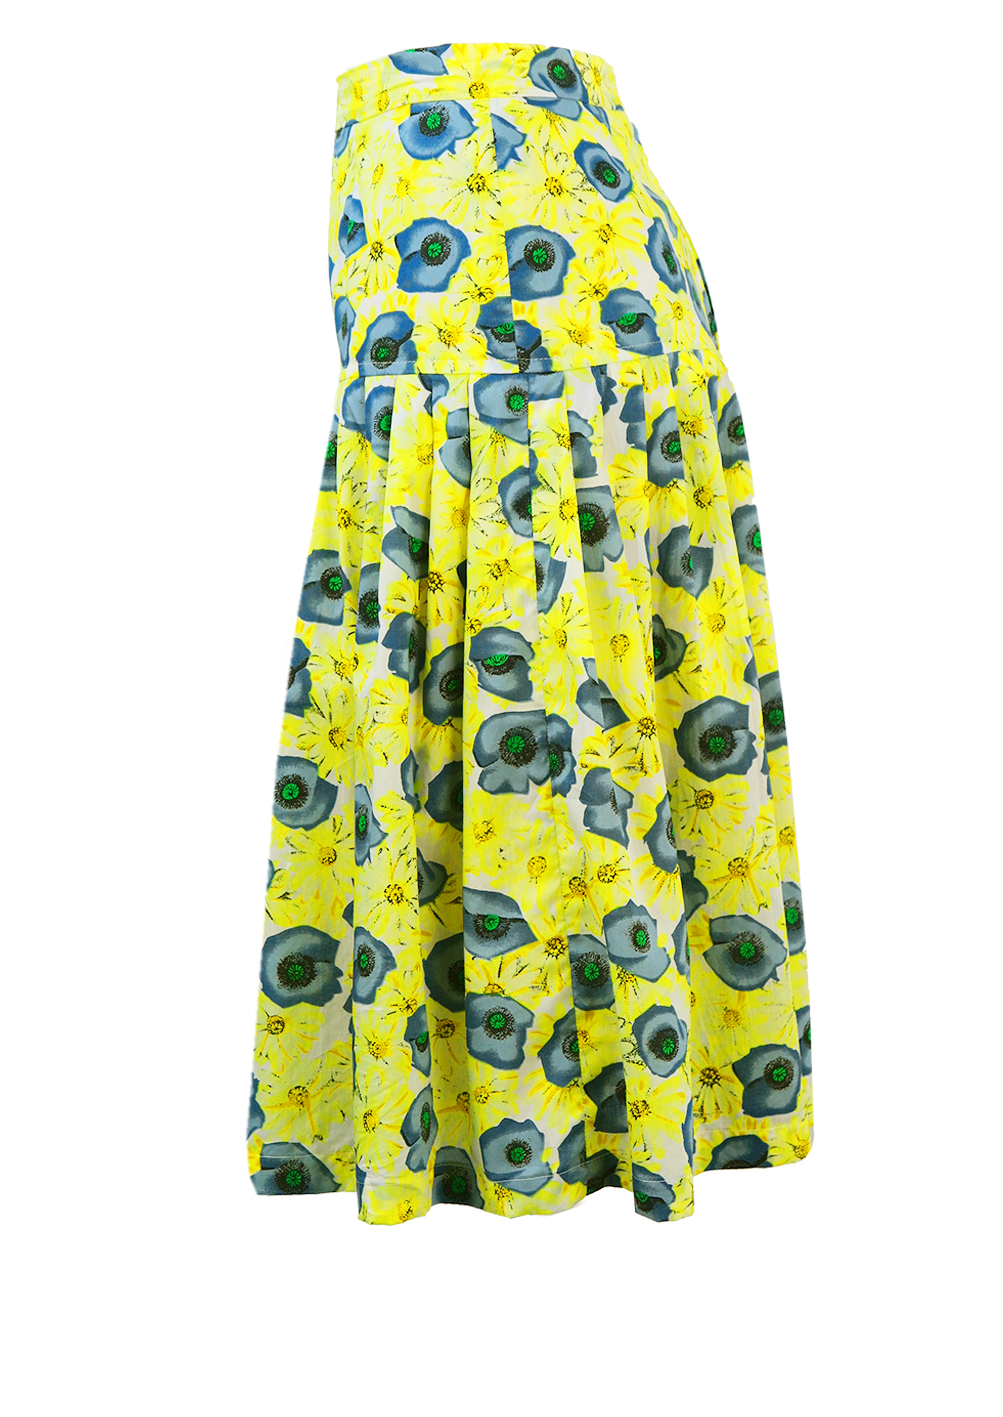 Yellow & Blue Floral Patterned Full Knee Length Skirt - S/M | Reign Vintage